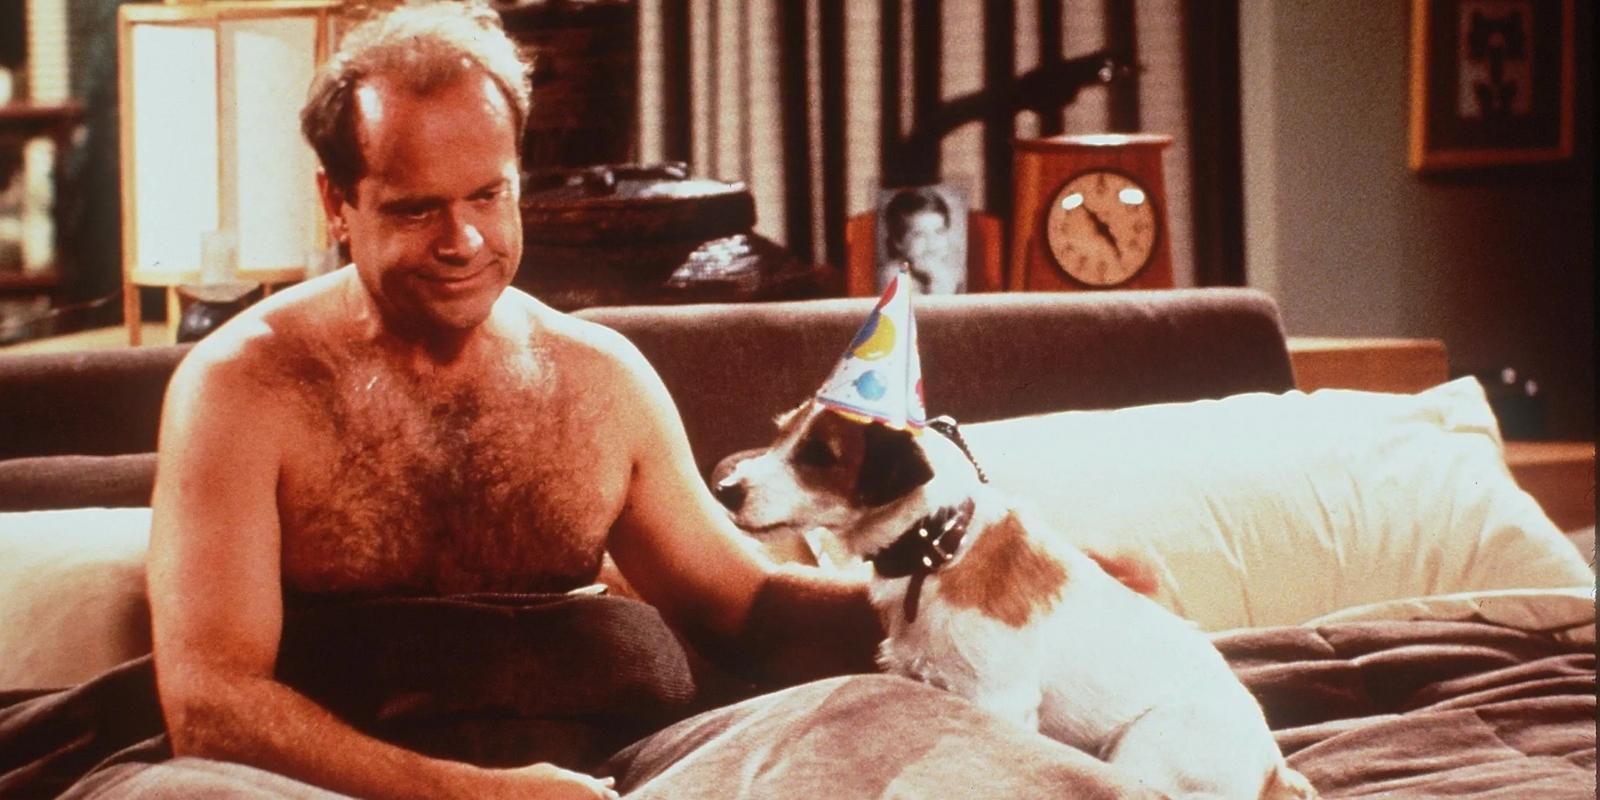 Eddie the dog wearing a birthday hat in bed wih Frasier Crane in Frasier